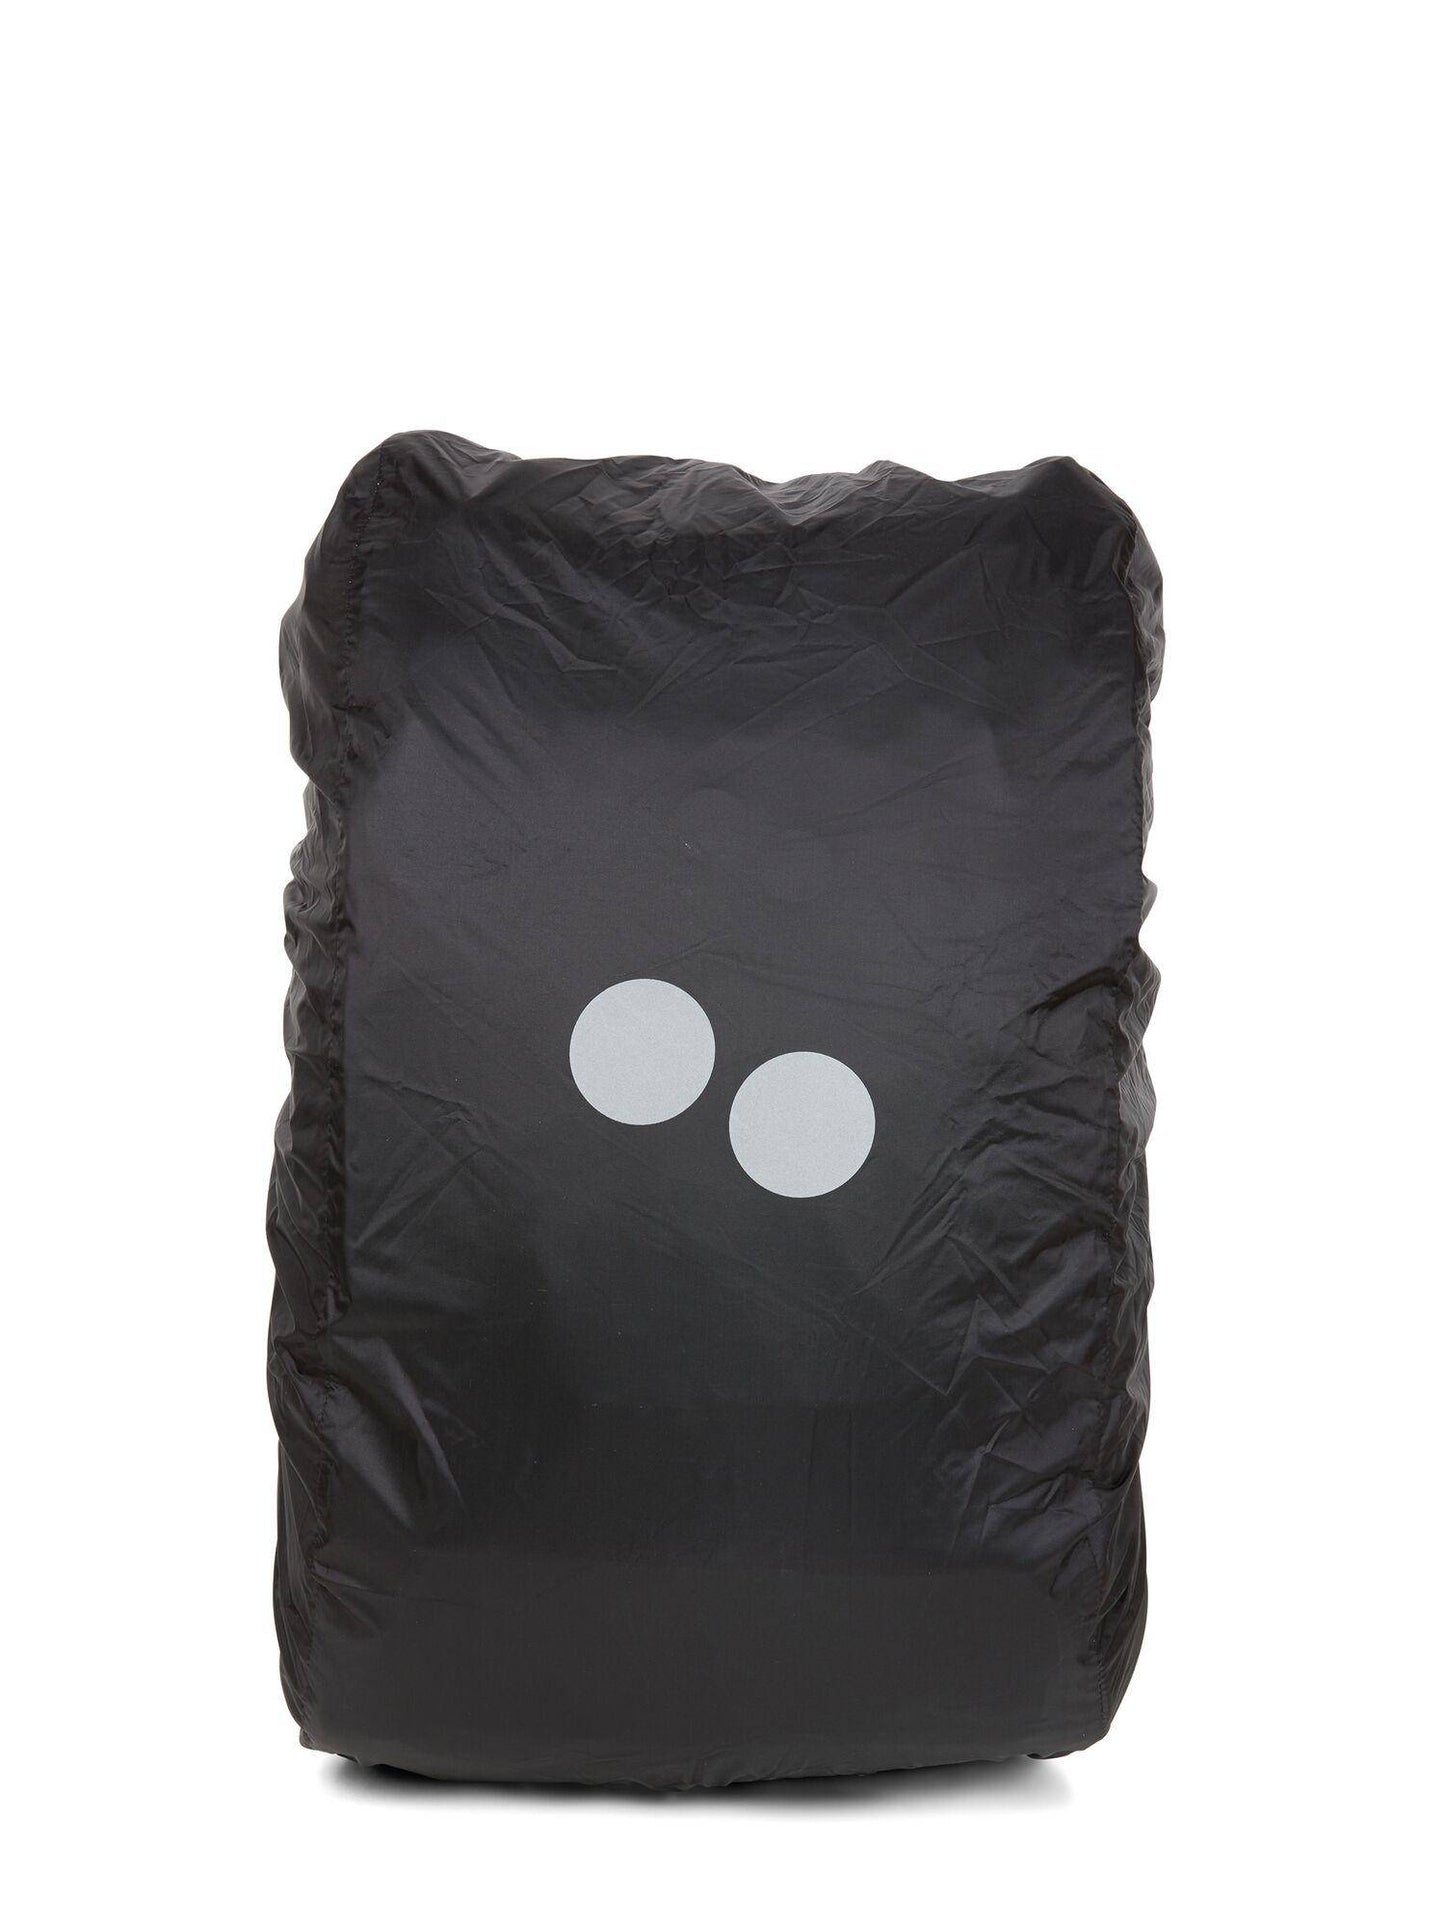 pinqponq-kover-blok-medium-protect-black-rain-cover-front